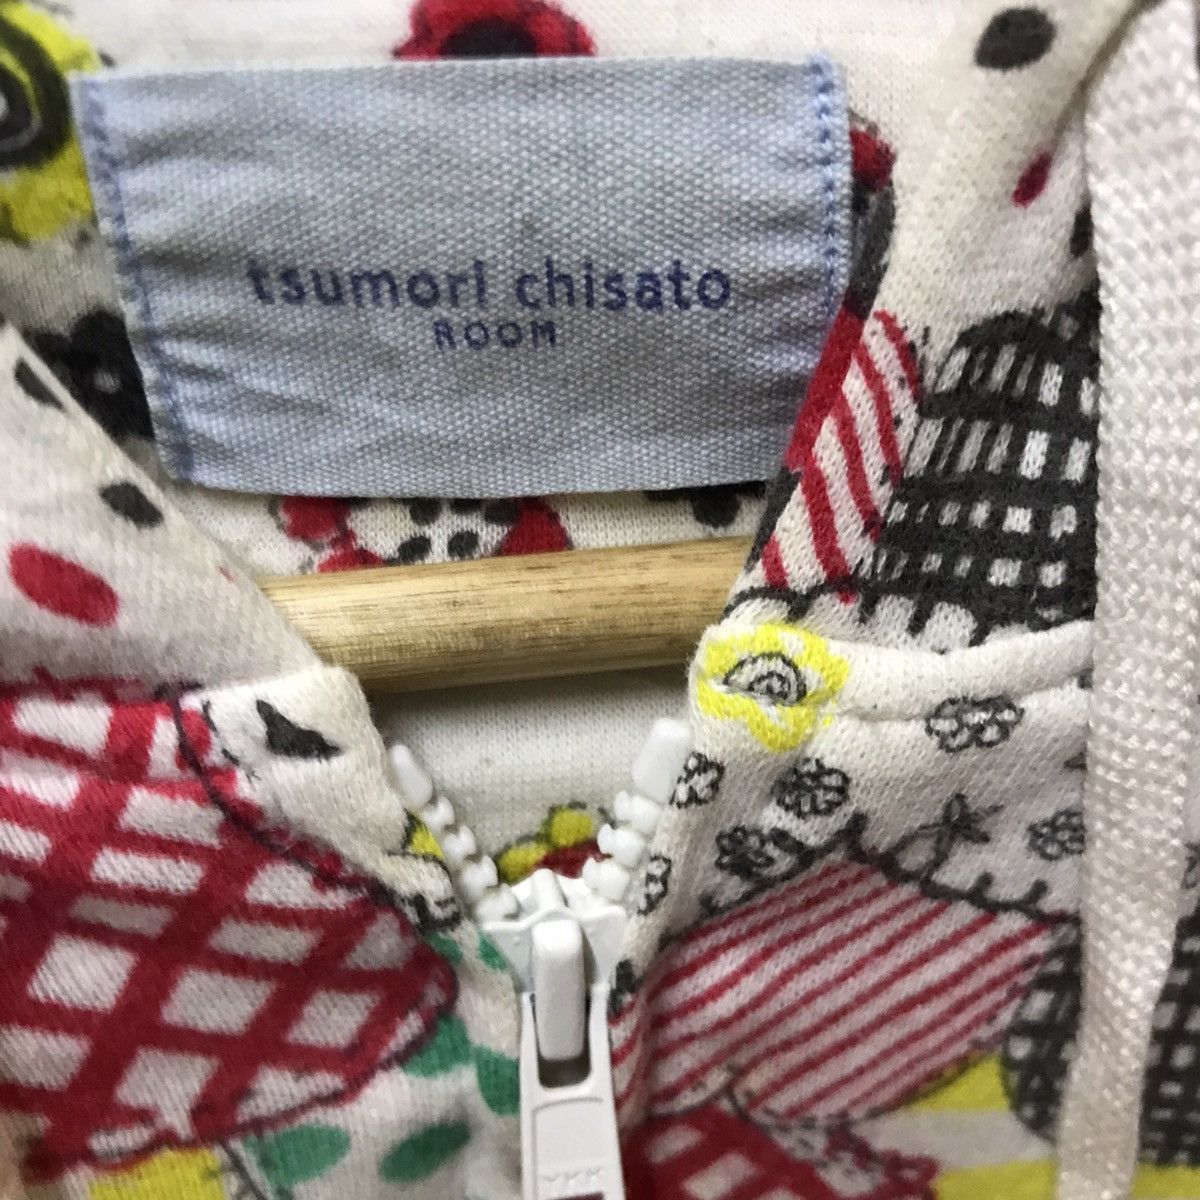 Tsumori chisato room fullprinted hoodie - 3